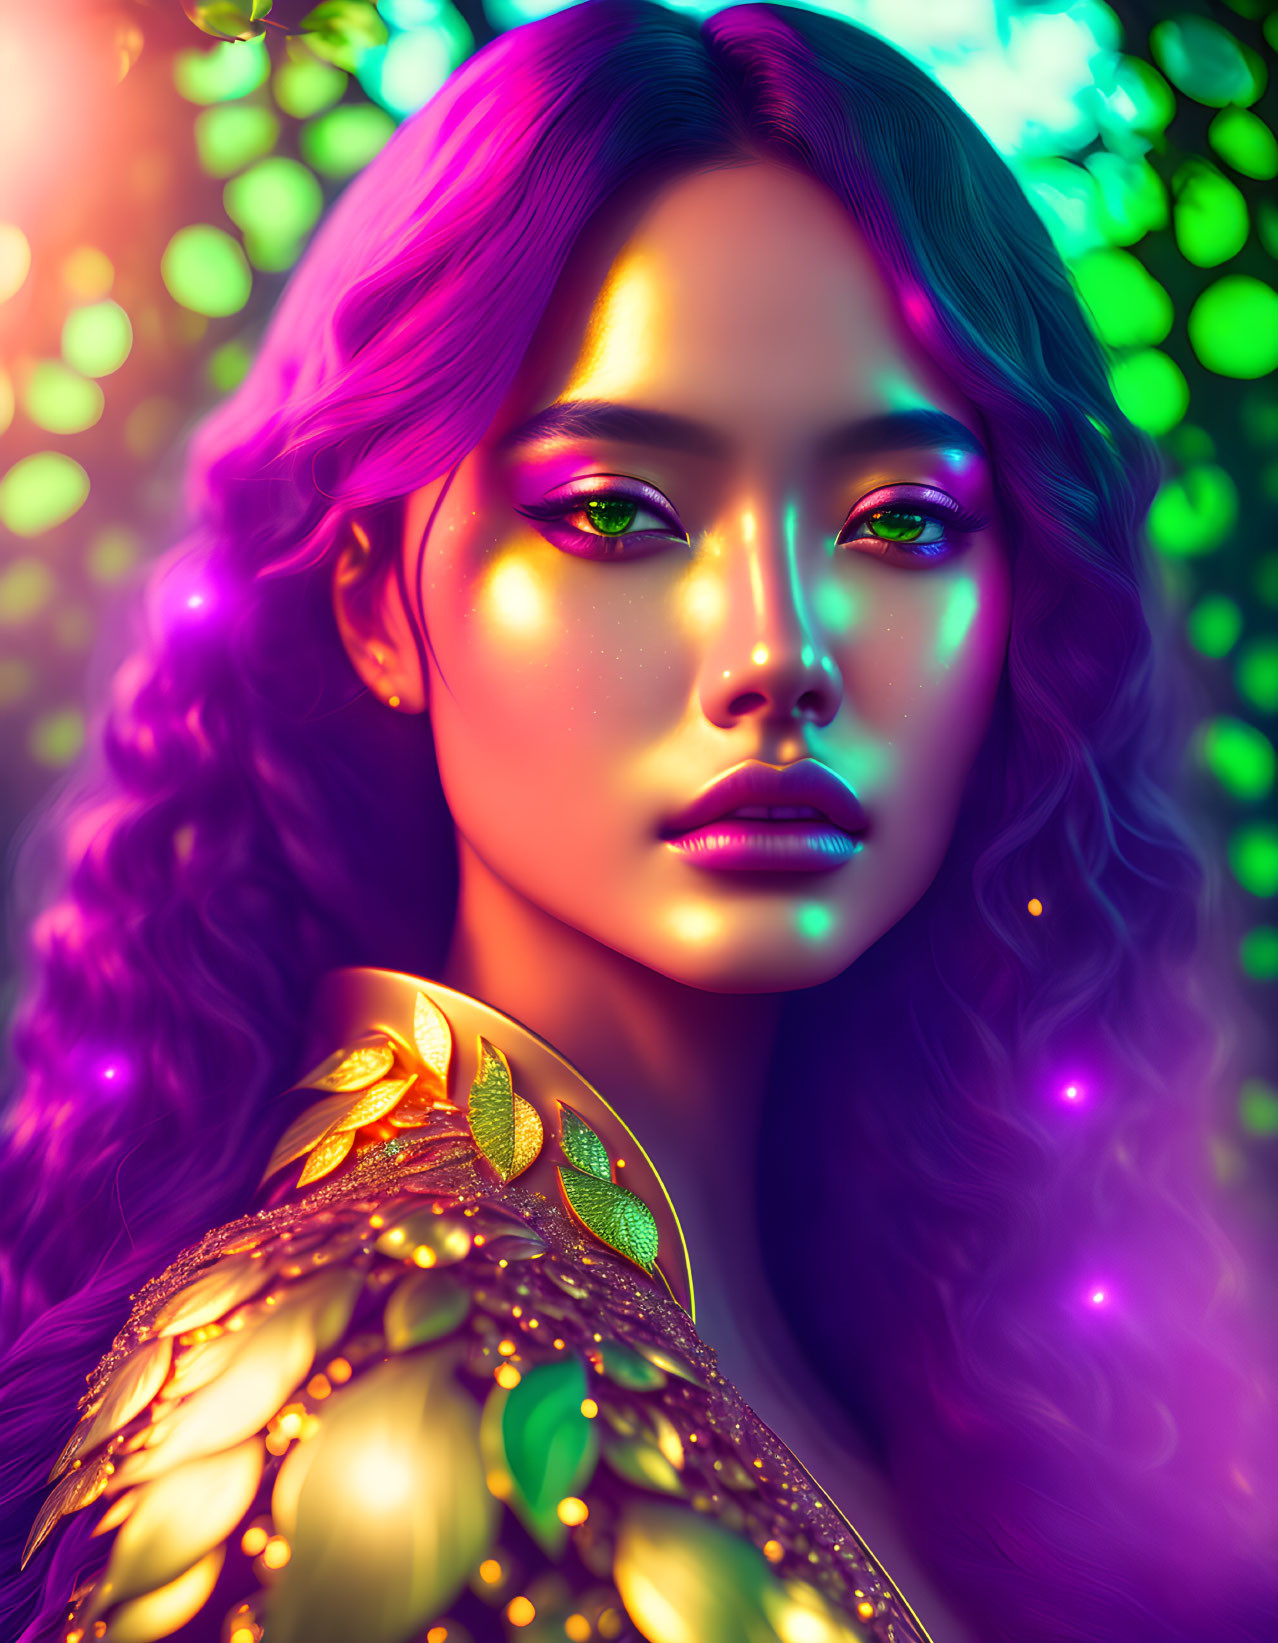 Colorful digital portrait featuring woman with neon lighting & unique shoulder embellishments